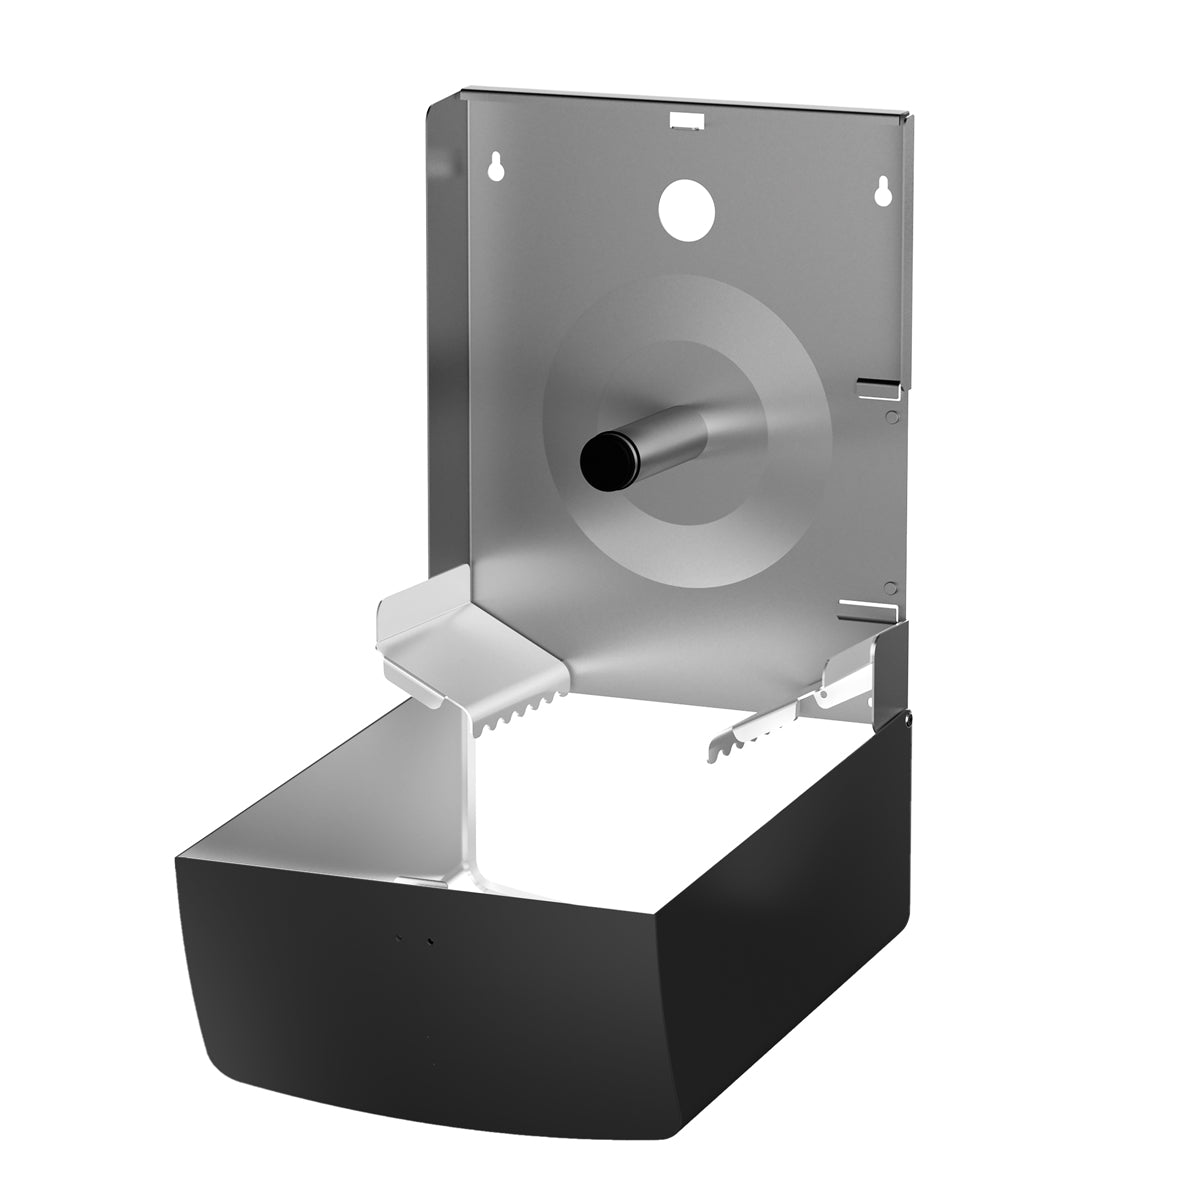 AIR-WOLF - Duplex Papirrull dispenser - til 3 Toalettpapirruller eller 1 Jumborull